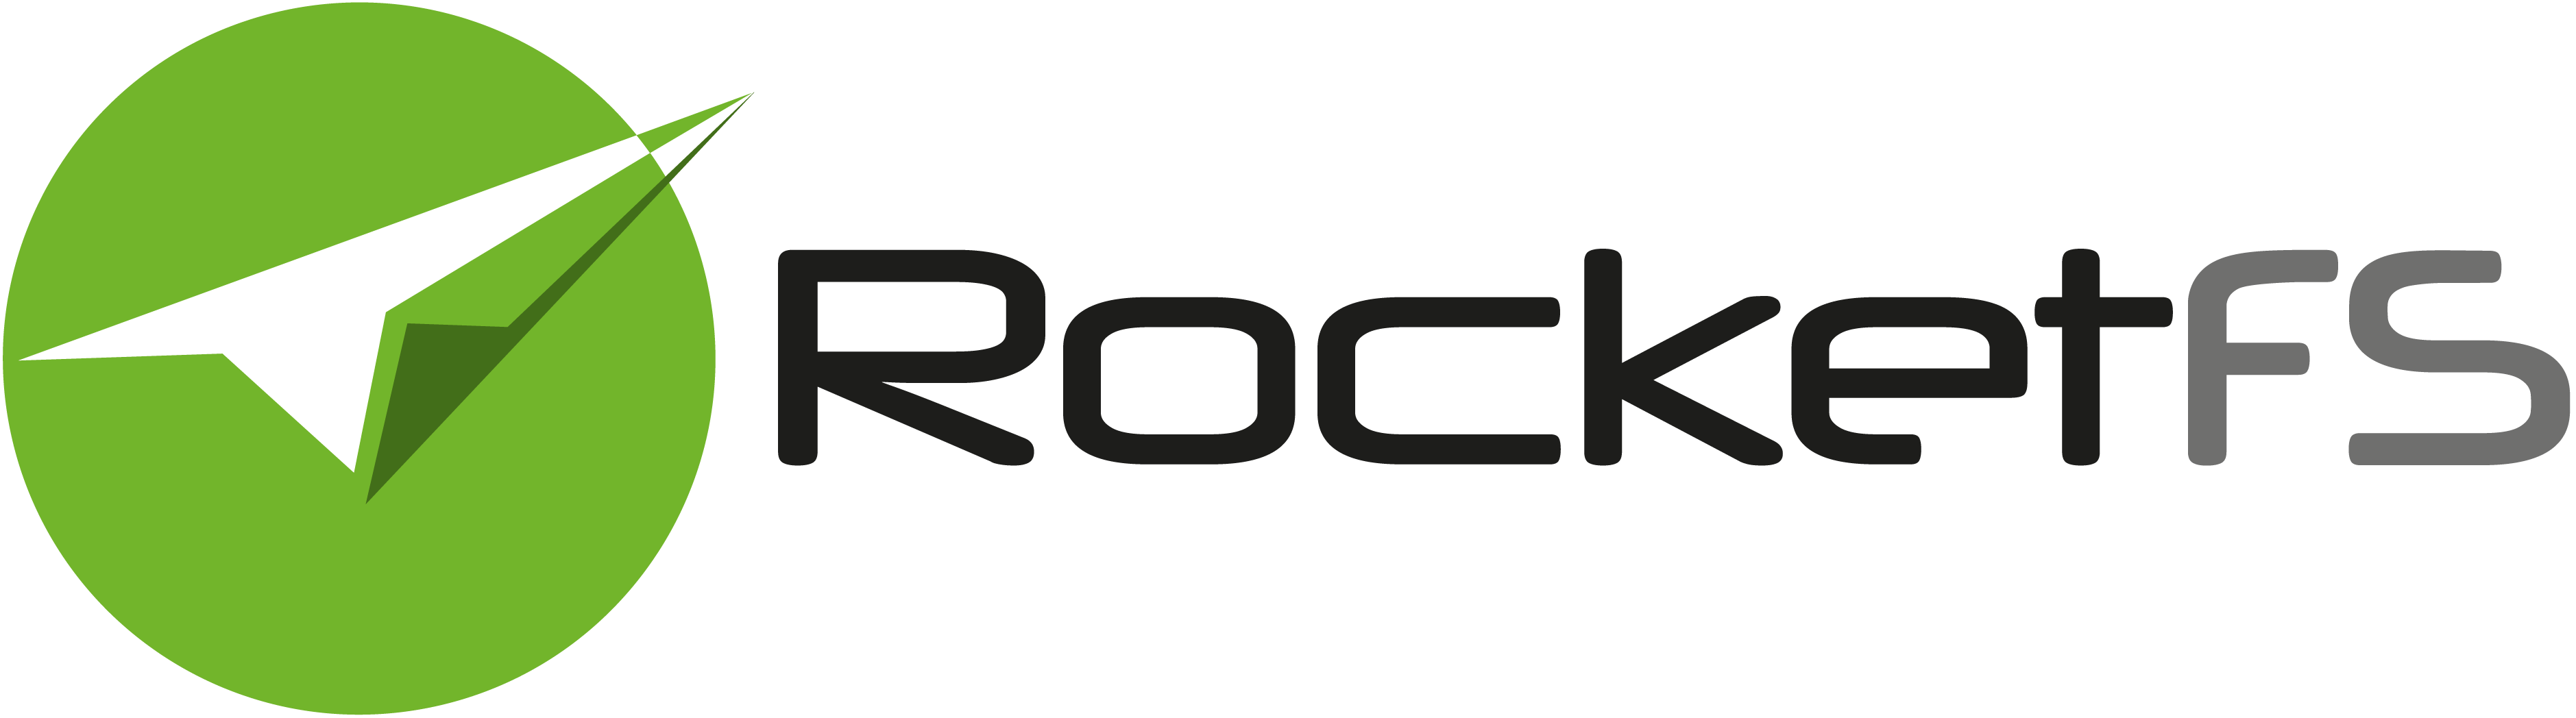 https://paperrockets.tech/wp-content/uploads/2021/11/RocketFS_Logo-Final-1.png